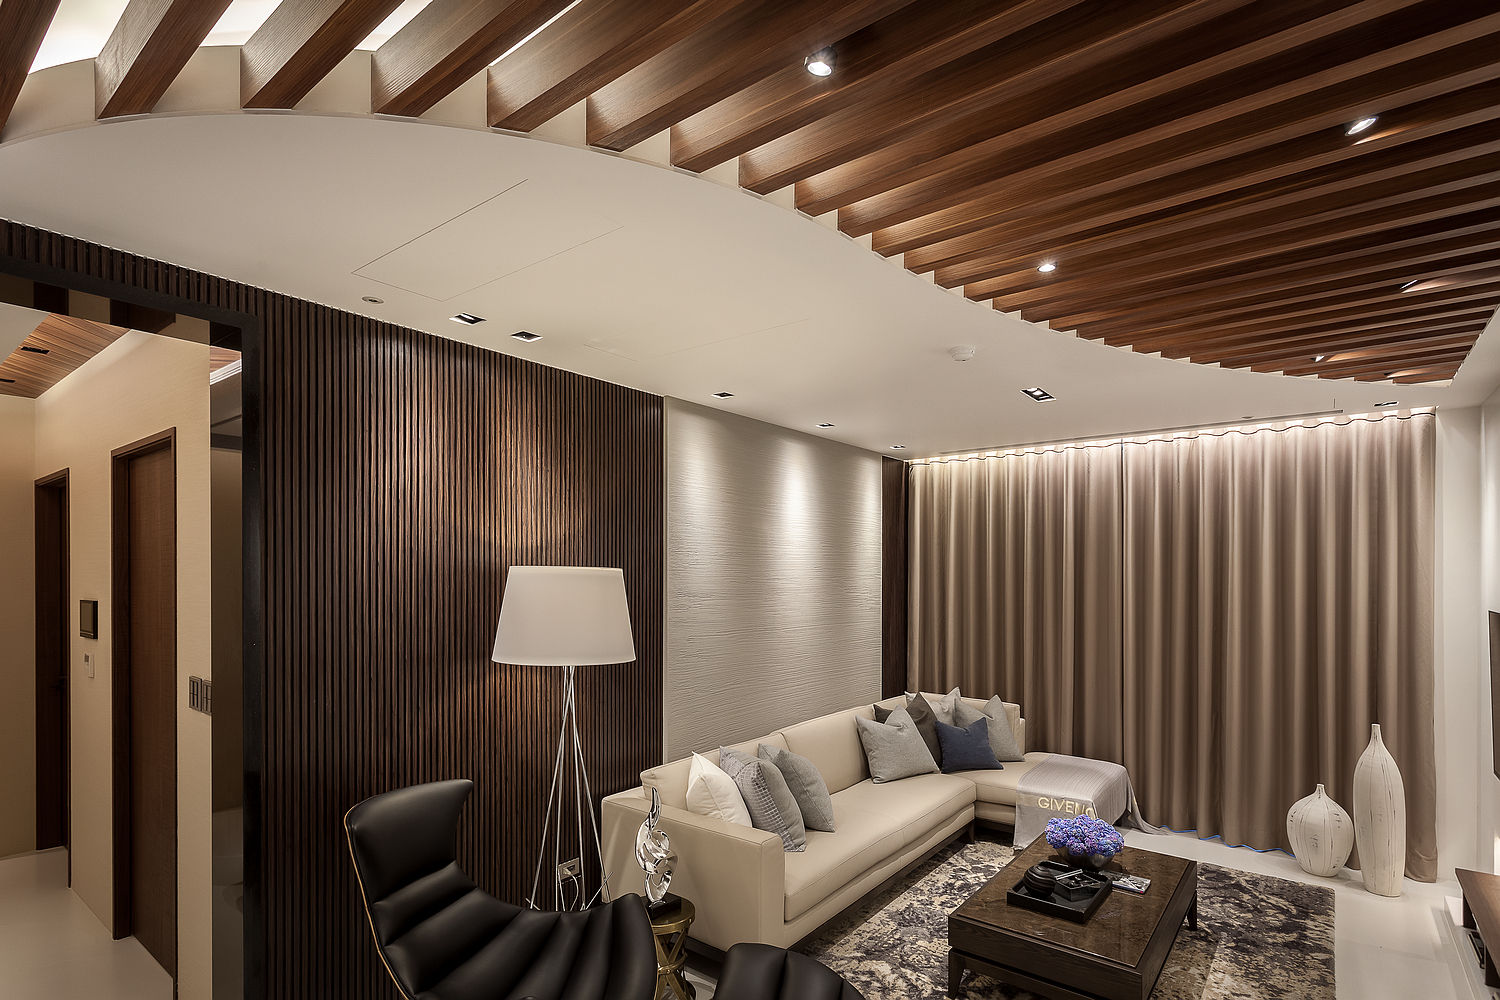 Interior Design - Ko Residence, 王子華設計工作室 王子華設計工作室 ห้องนั่งเล่น โซฟาและเก้าอี้นวม